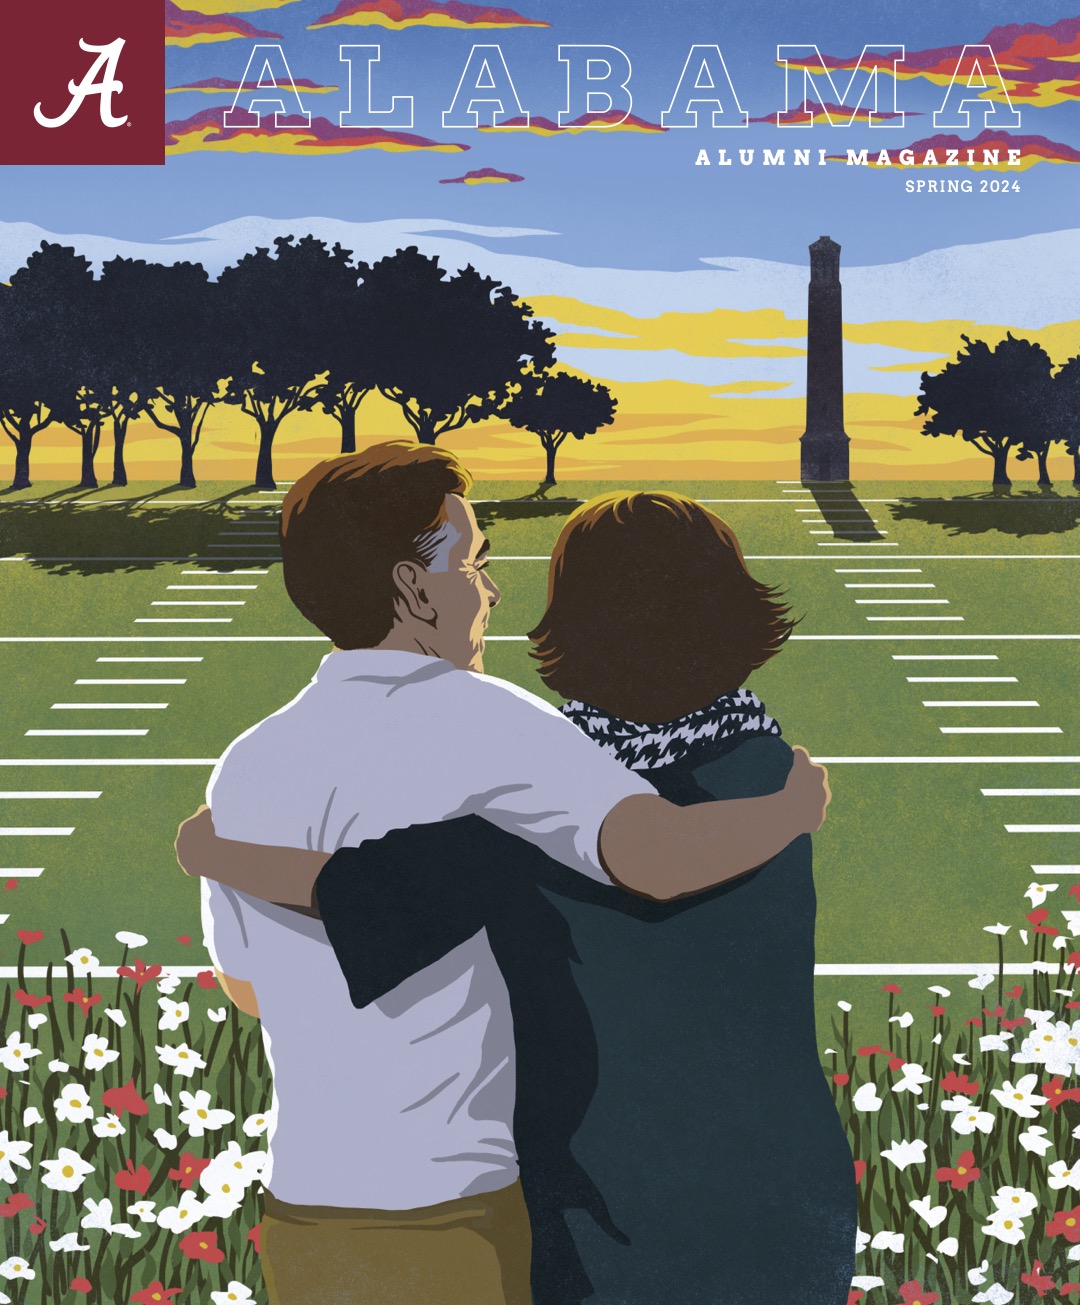 Alumni Magazine Cover for Spring 2024